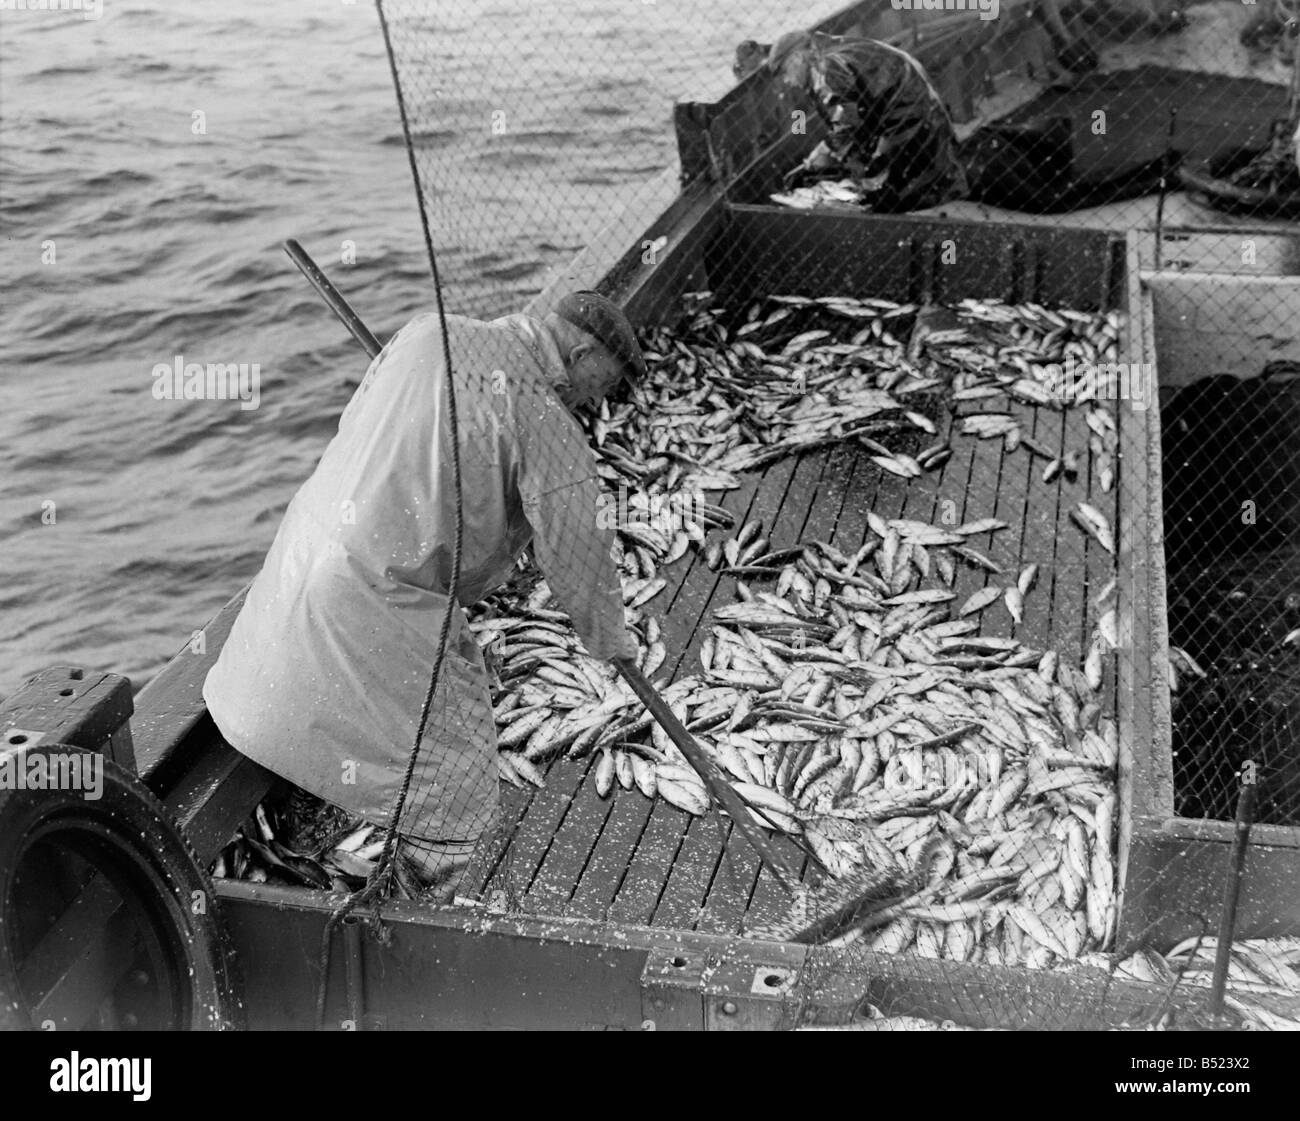 Fishing fleet Black and White Stock Photos & Images - Alamy